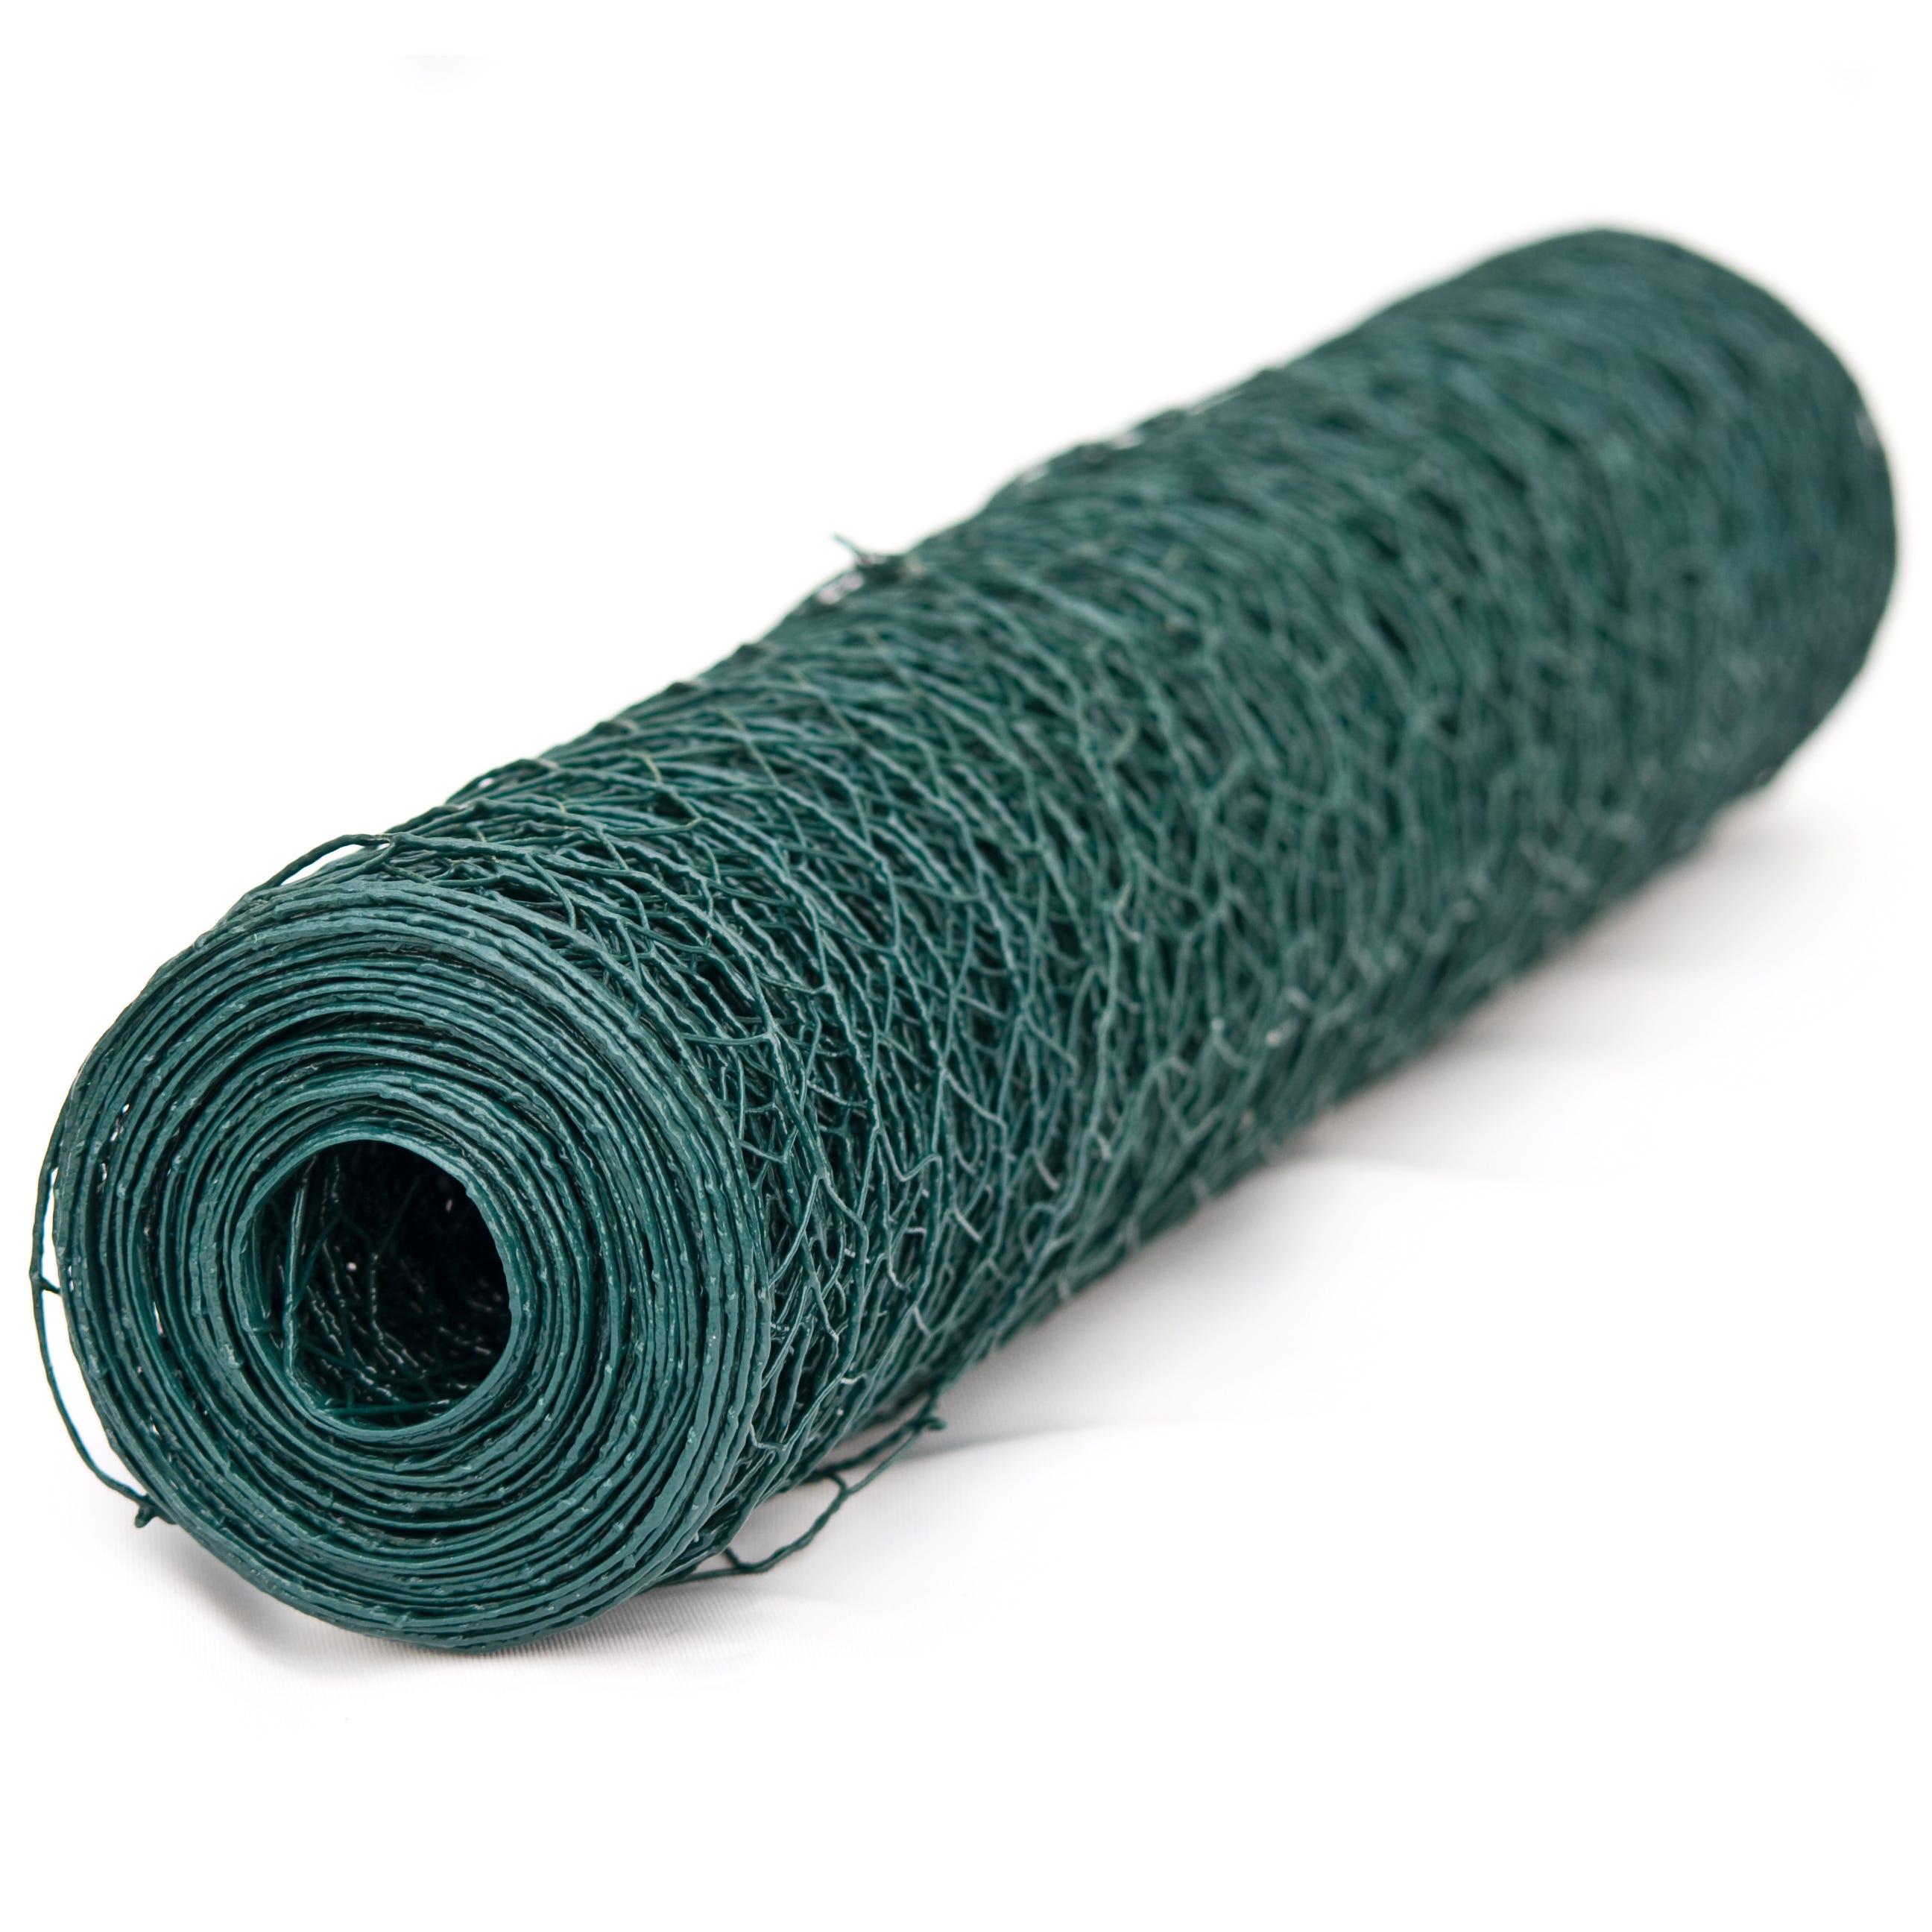 Grillage plastique maille 1 cm - vert - 1 x 3 m CUADRANET 